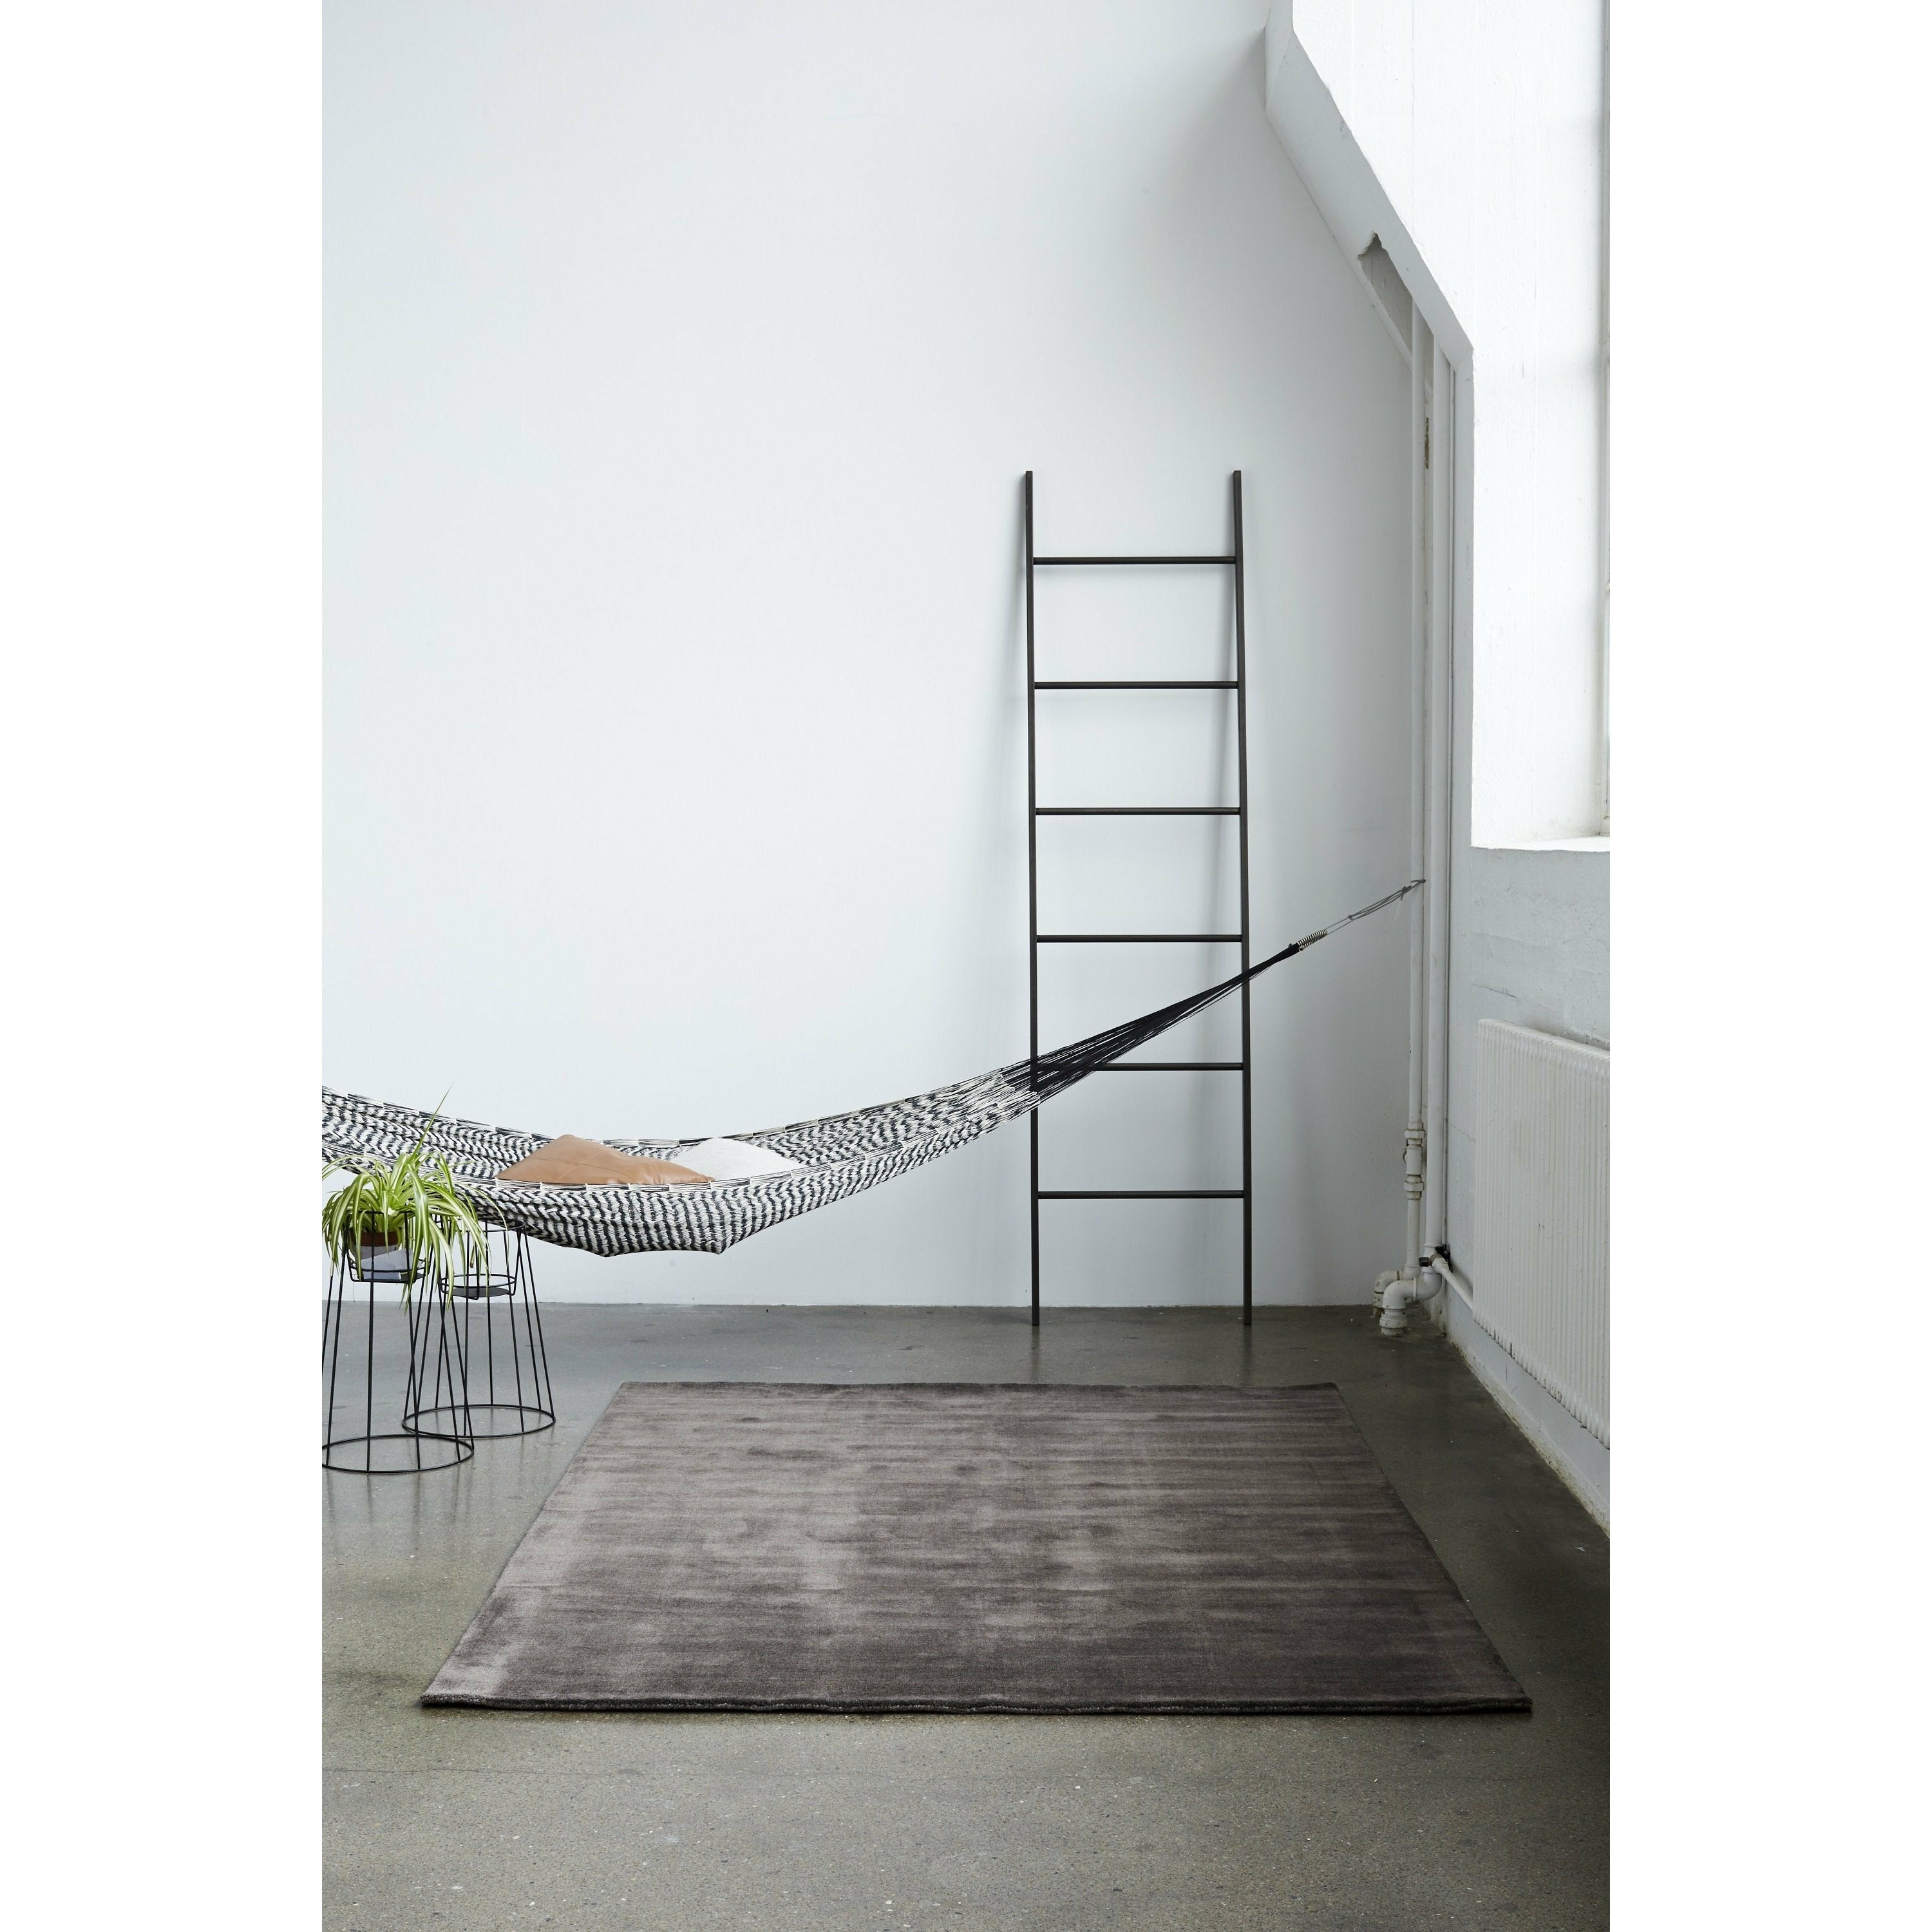 Massimo Země bambusový koberec teplá šedá, 300x400 cm